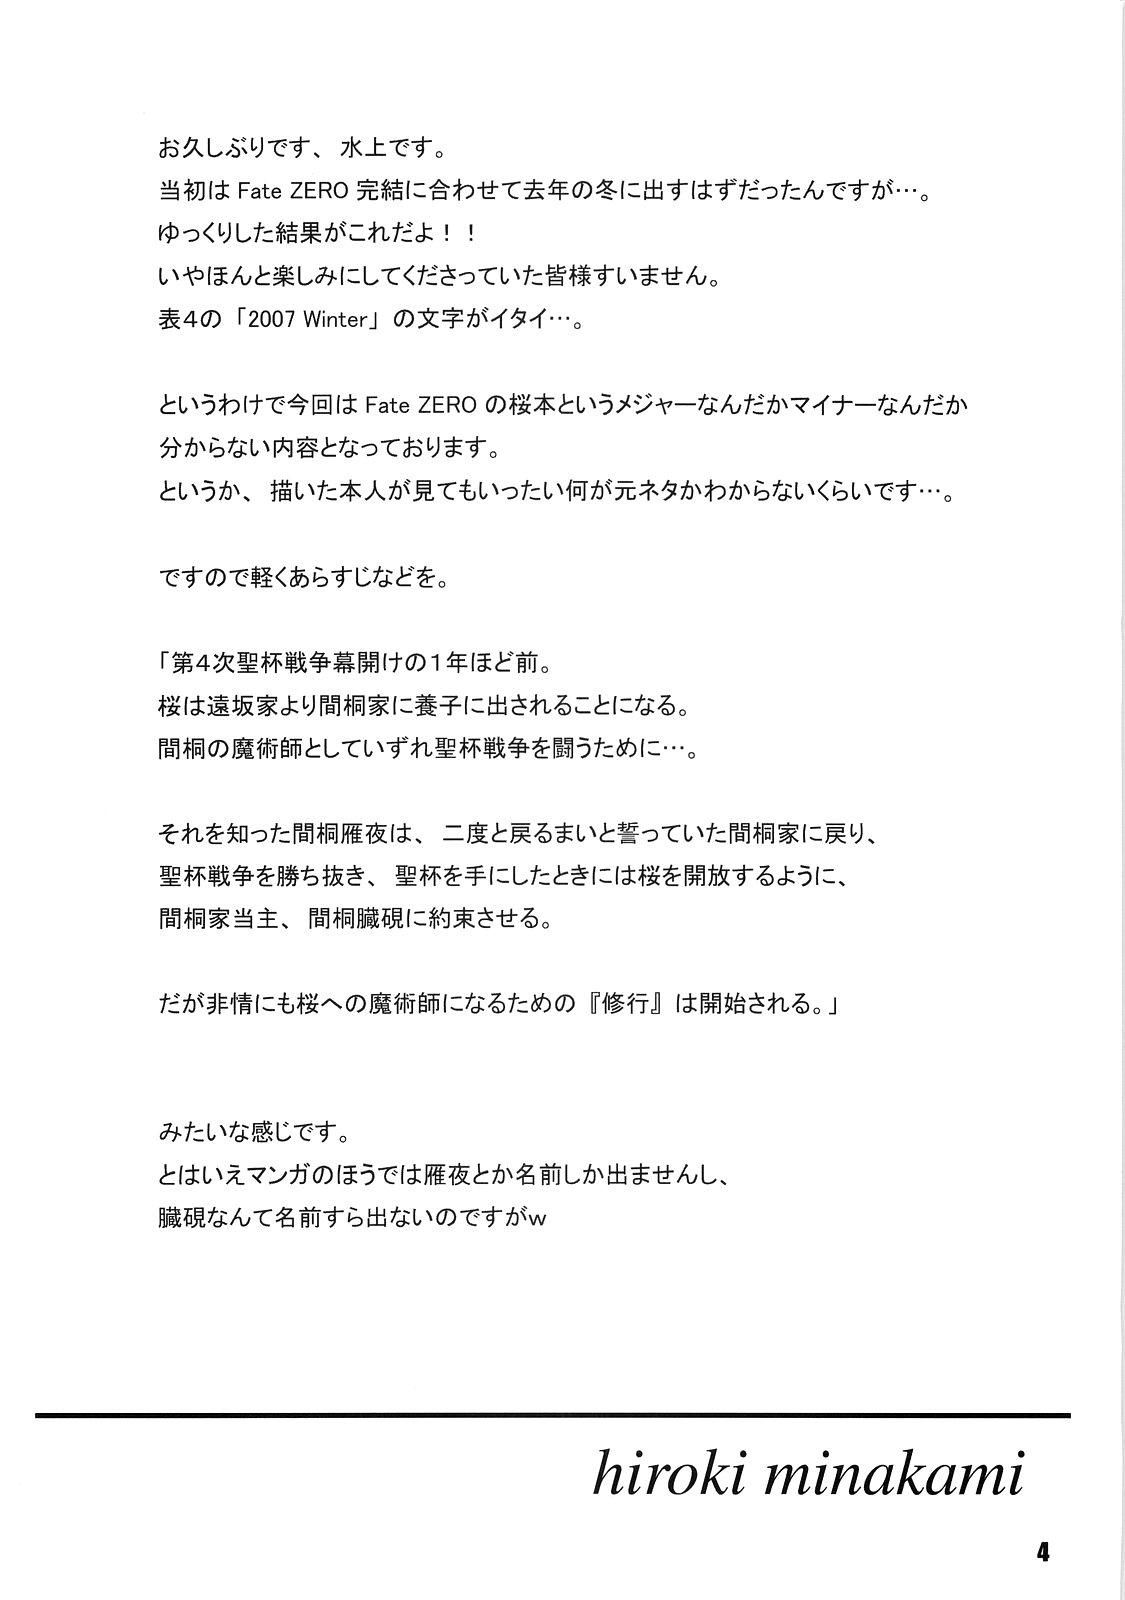 Ikillitts SAKURA Z-ERO EXtra stage vol. 22 - Fate stay night Fate zero Cbt - Page 3